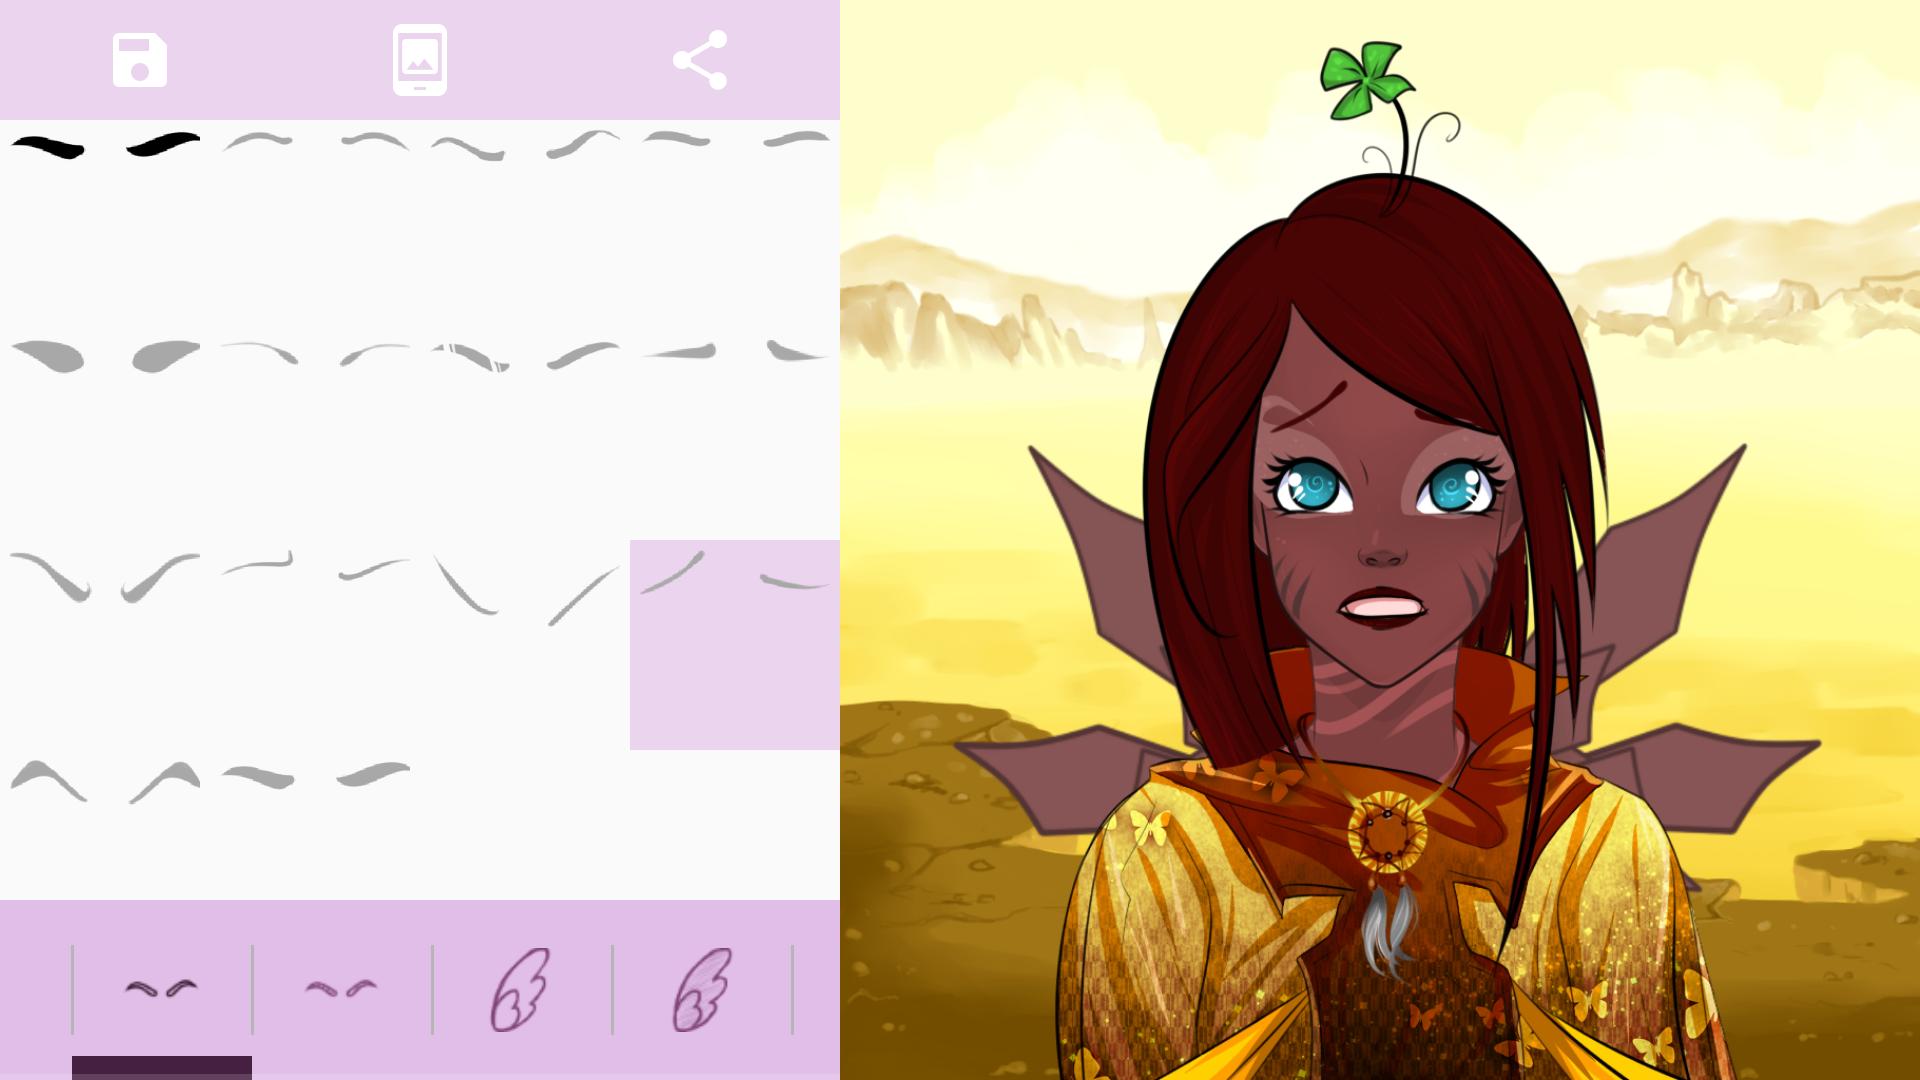 Crear De Avatares Chicas For Android Apk Download - crear avatar personajes de roblox mujeres